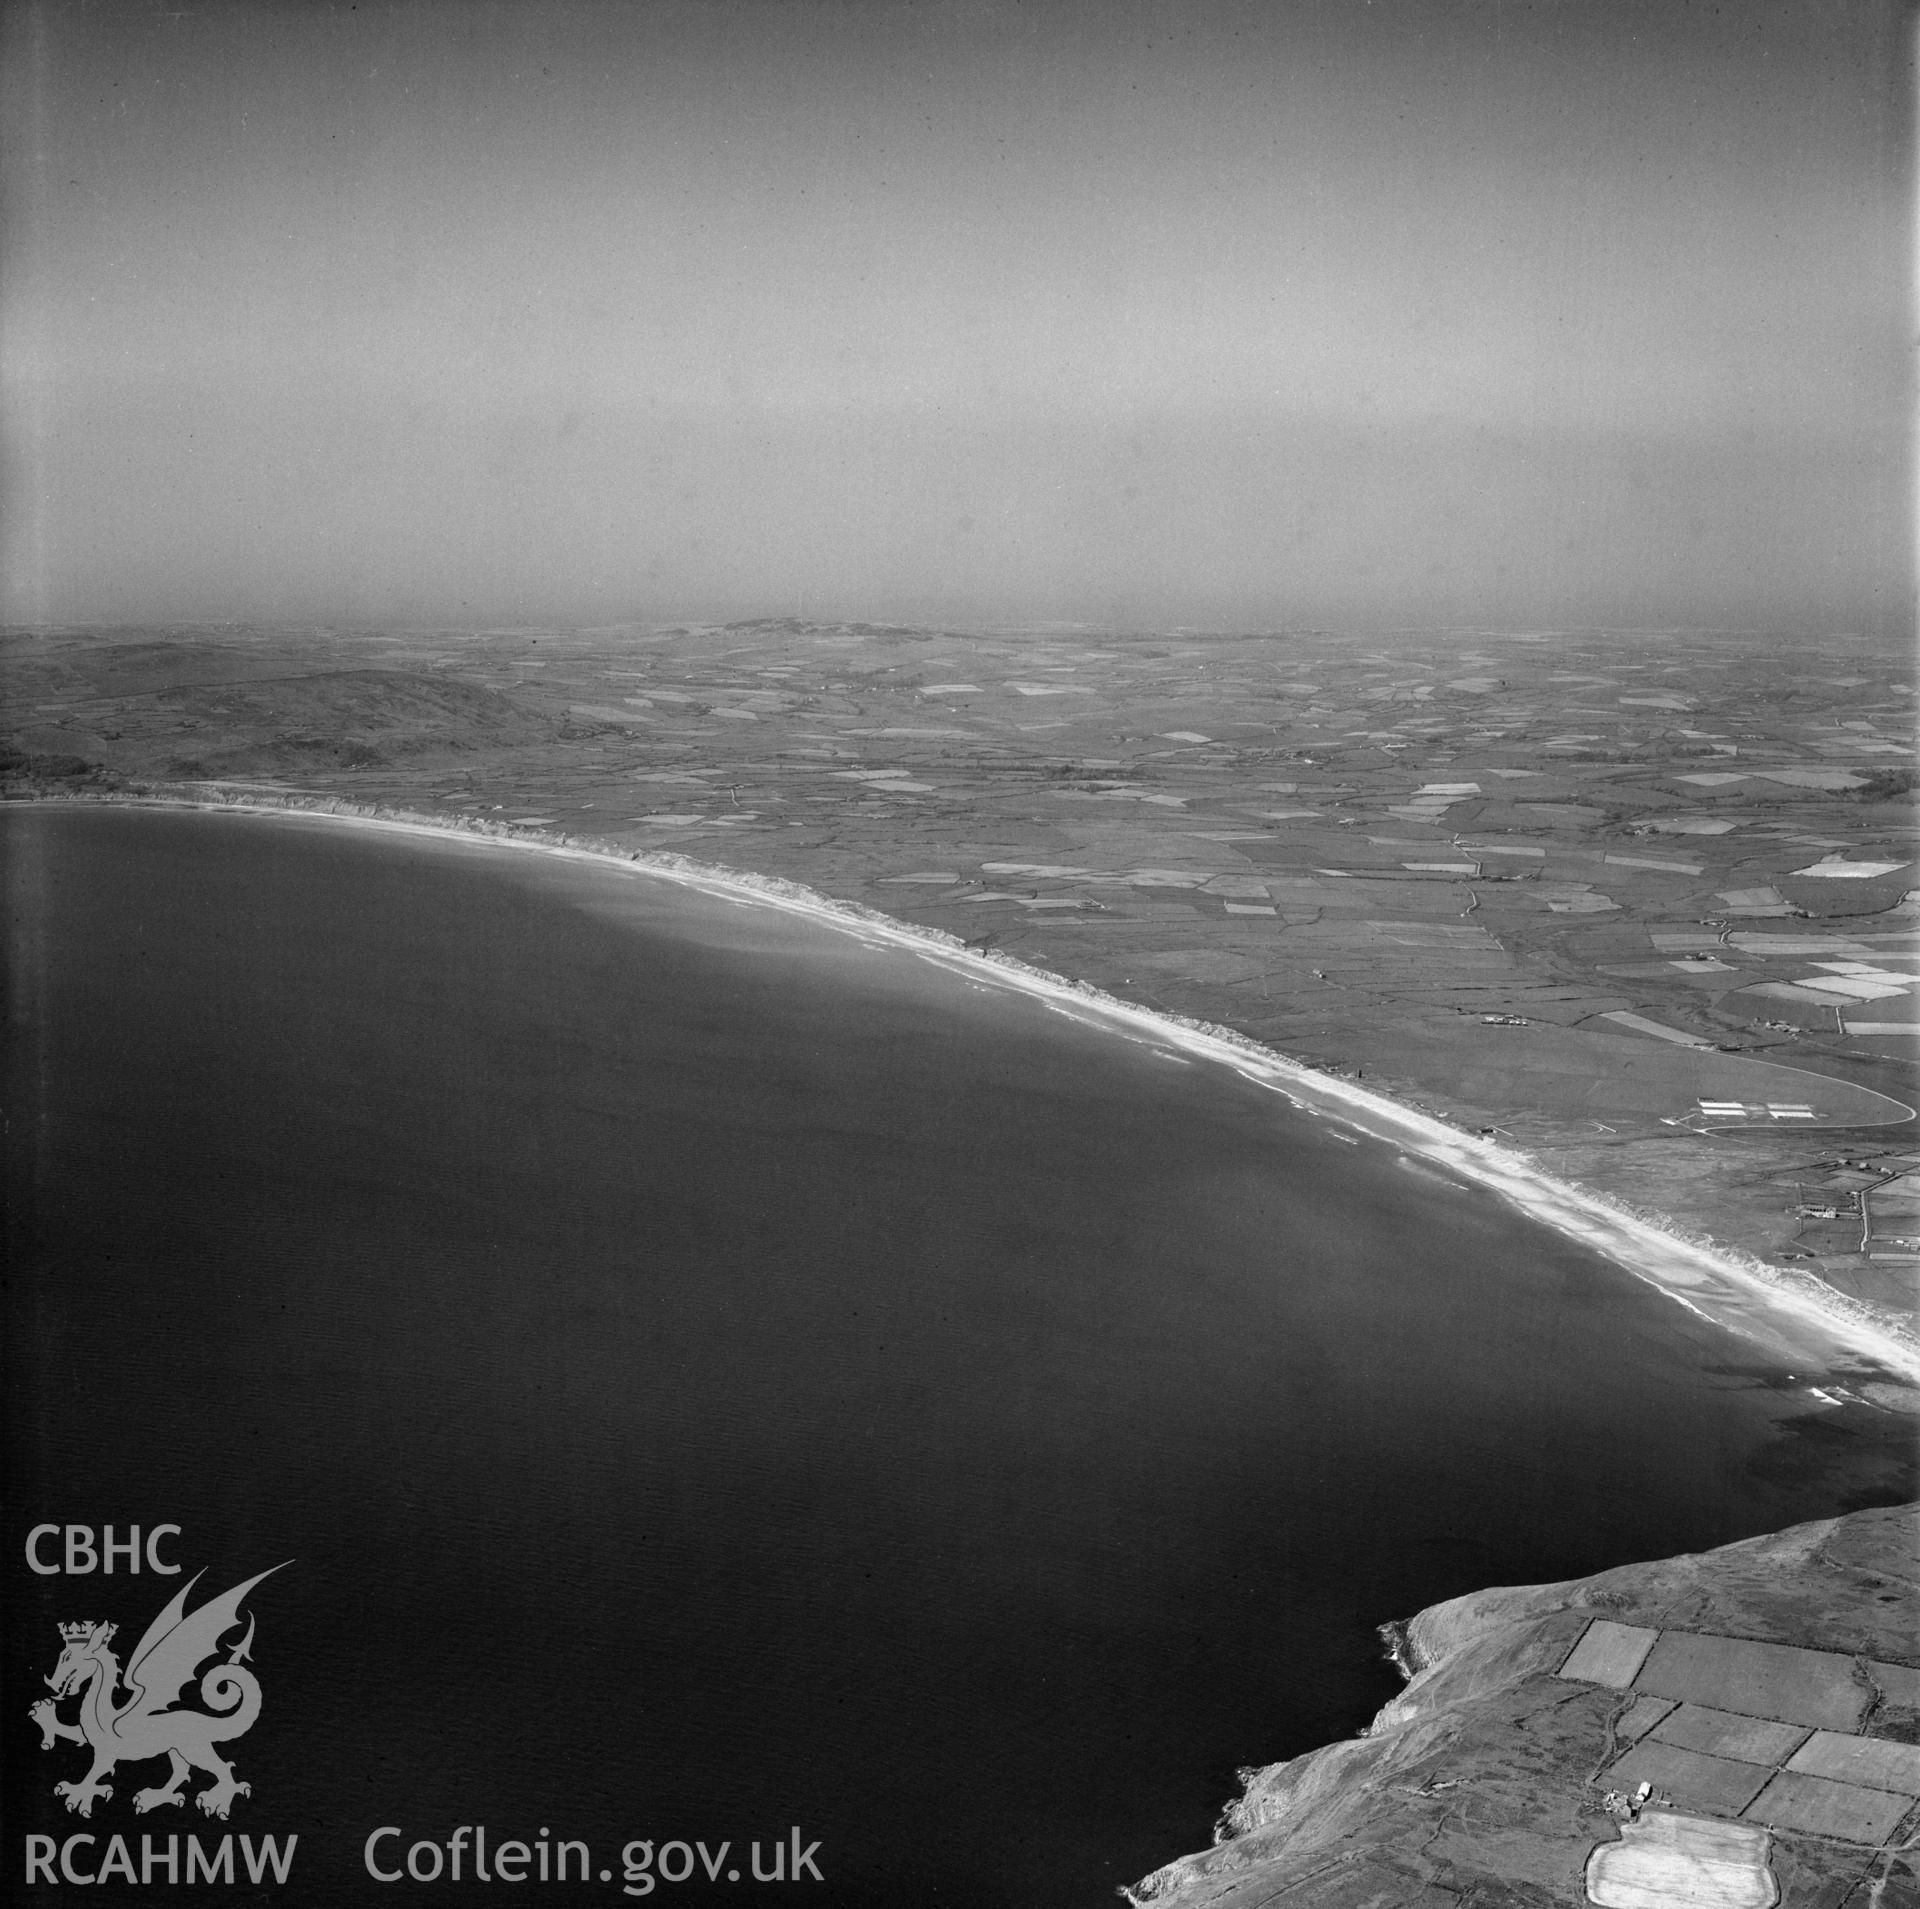 View showing Llyn Peninsular landscape: Hells' Mouth beach